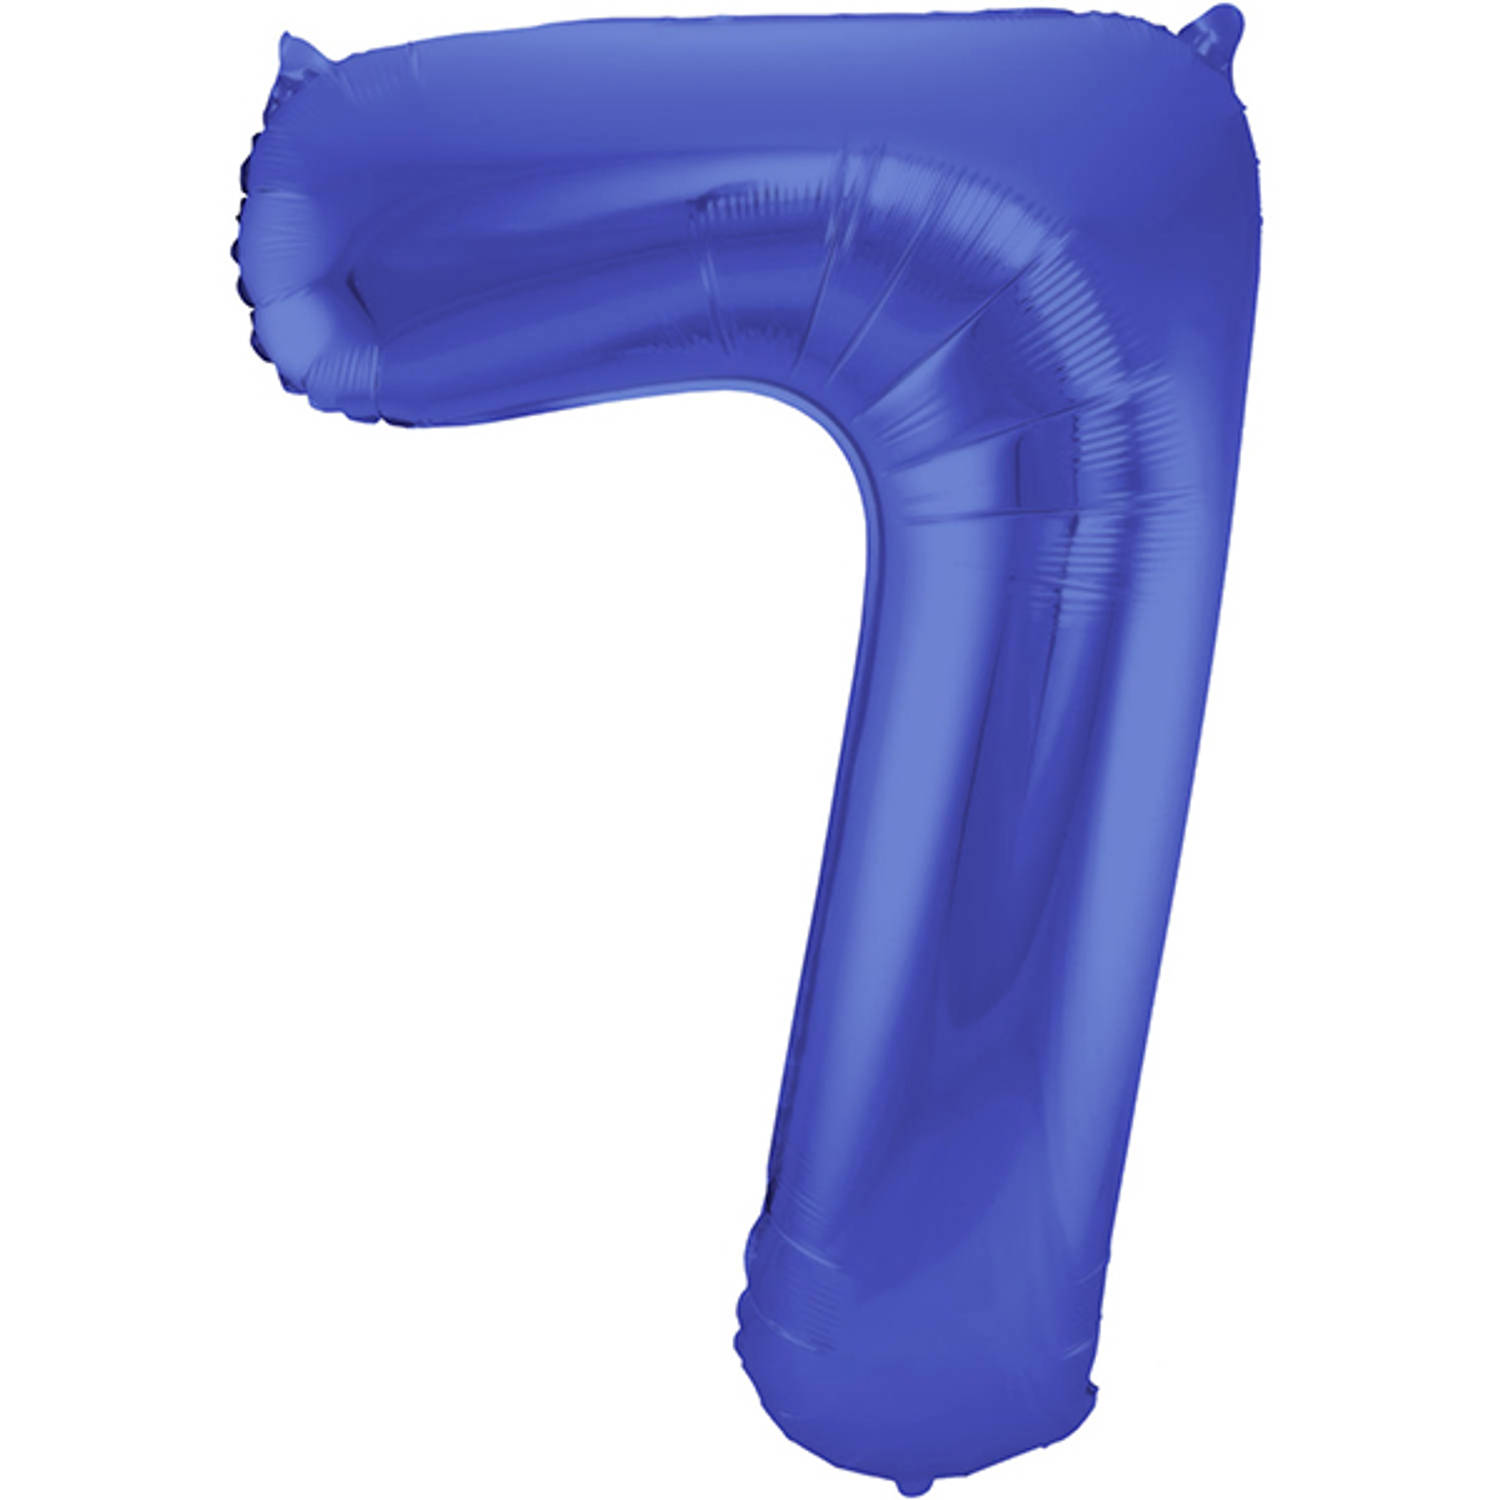 Folat Folie cijfer ballon - 86 cm blauw - cijfer 7 - verjaardag leeftijd